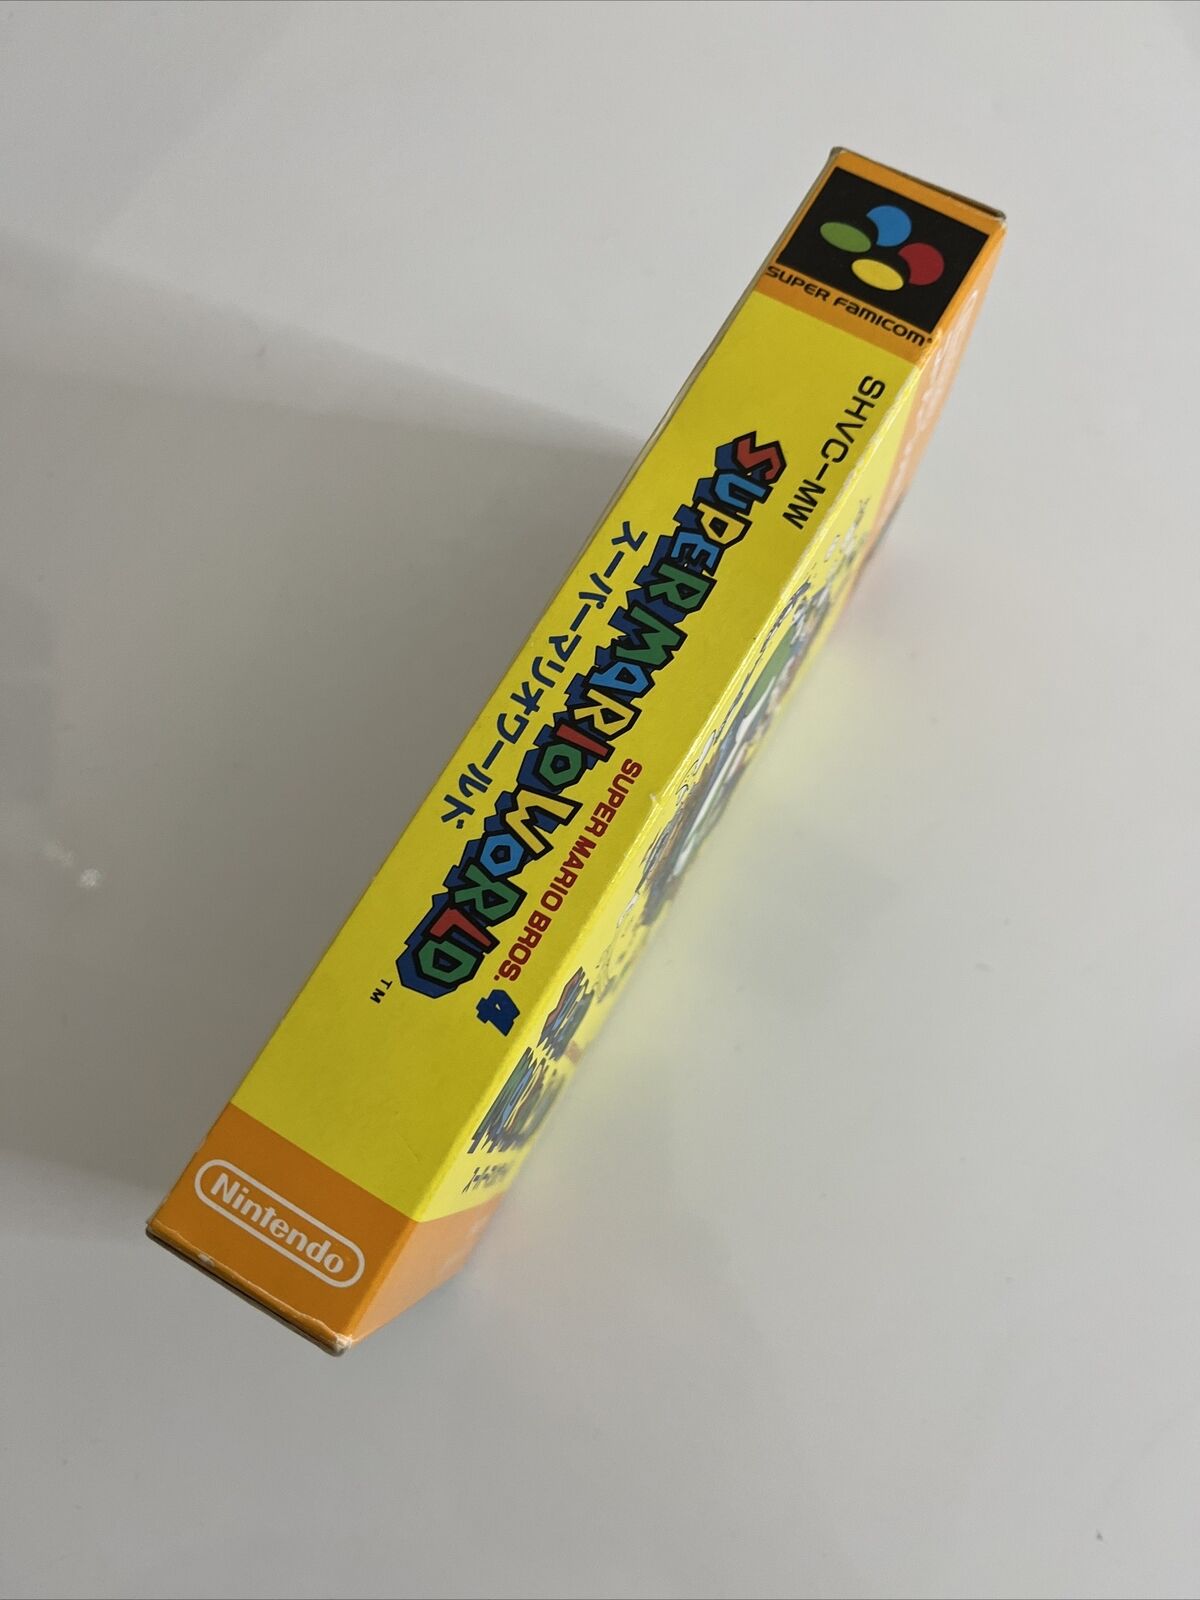 Super Mario World  Nintendo Super Famicom SNES NTSC-J JAPAN Game + Box